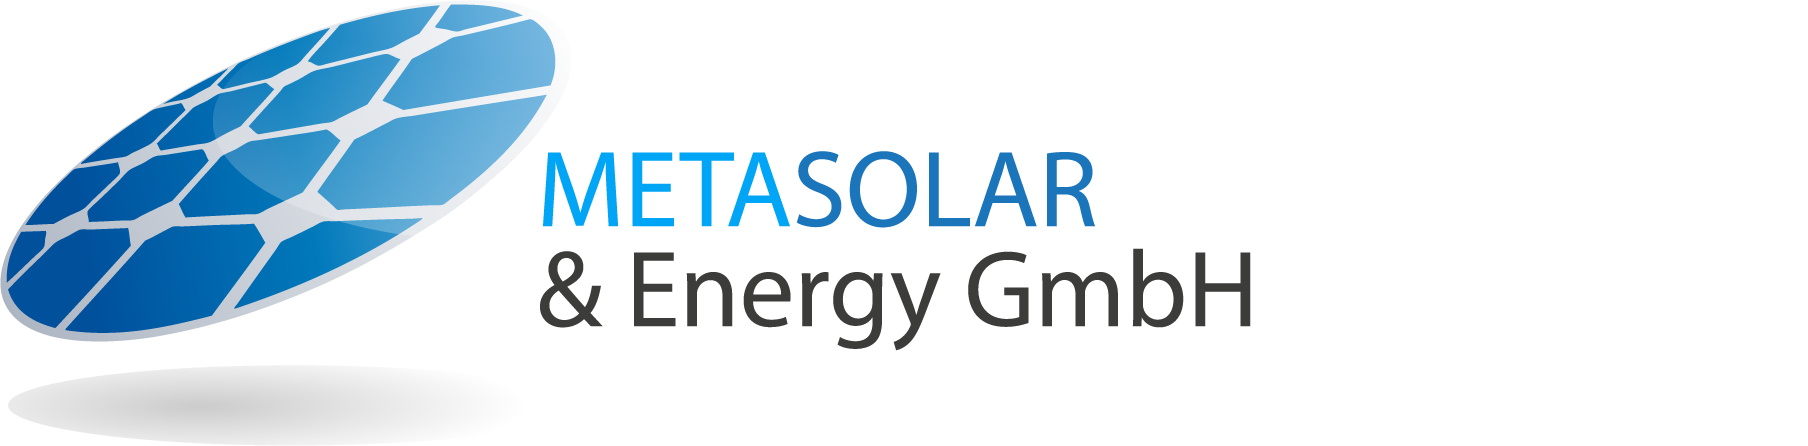 MetaSolar & Energy GmbH